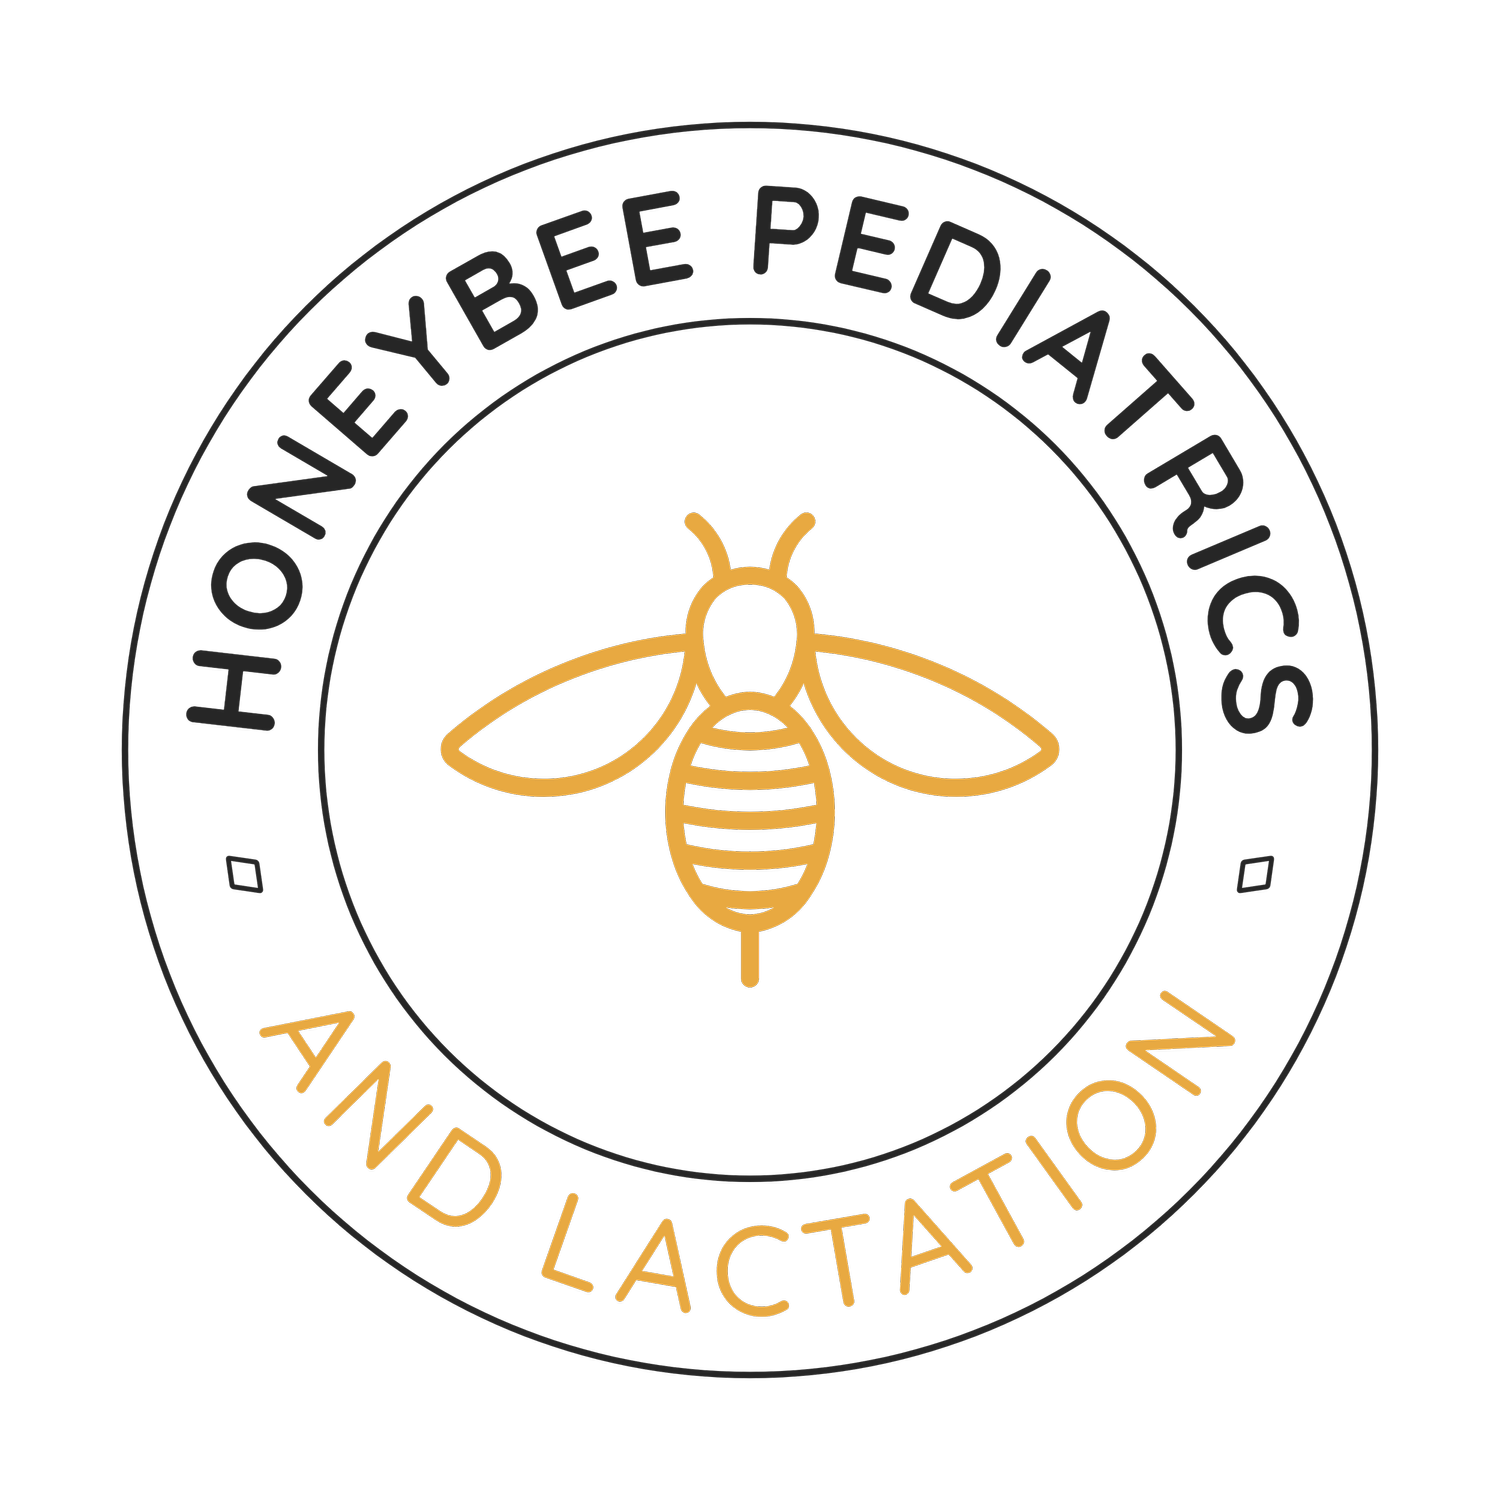 Honey Bee Pediatric and Lactation 